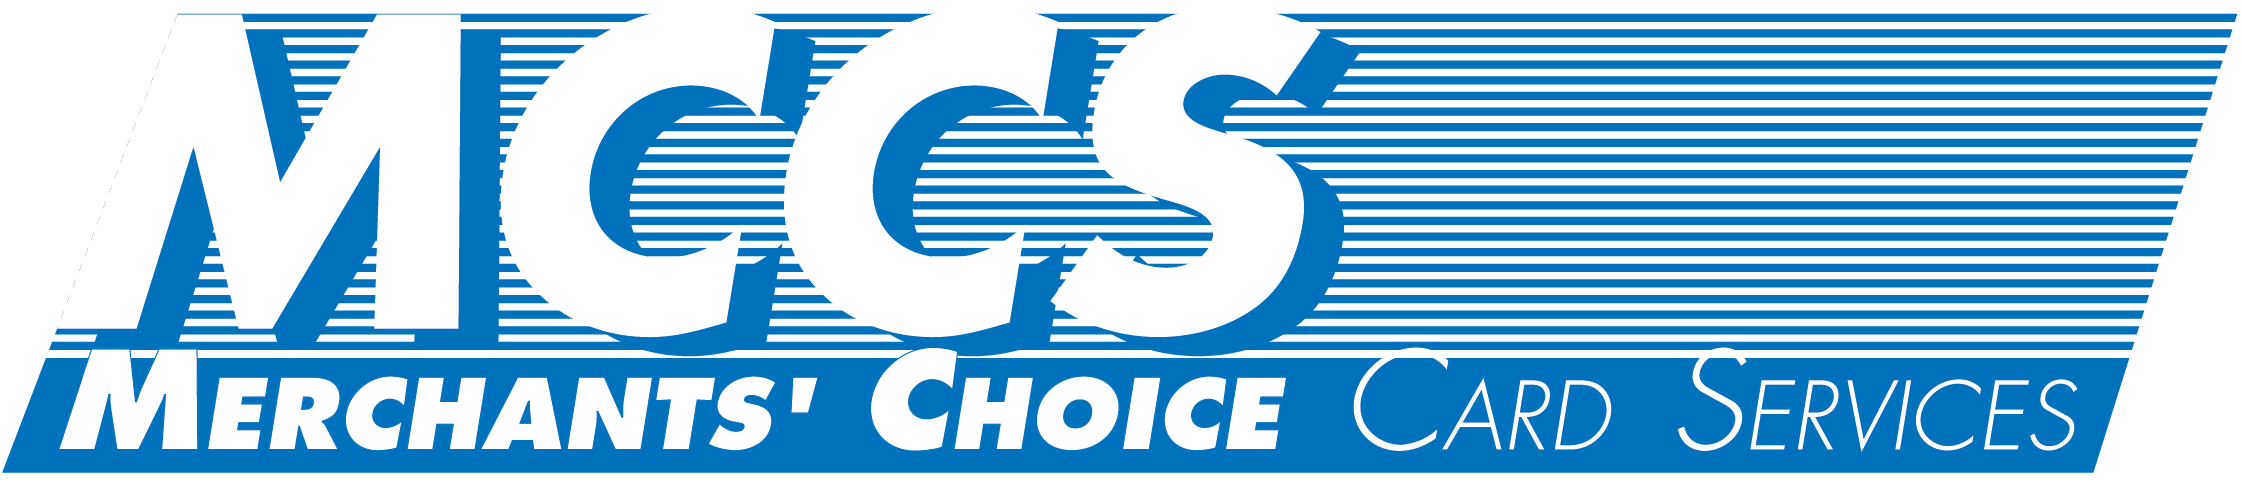 Merchants' Choice Card Services, LLC